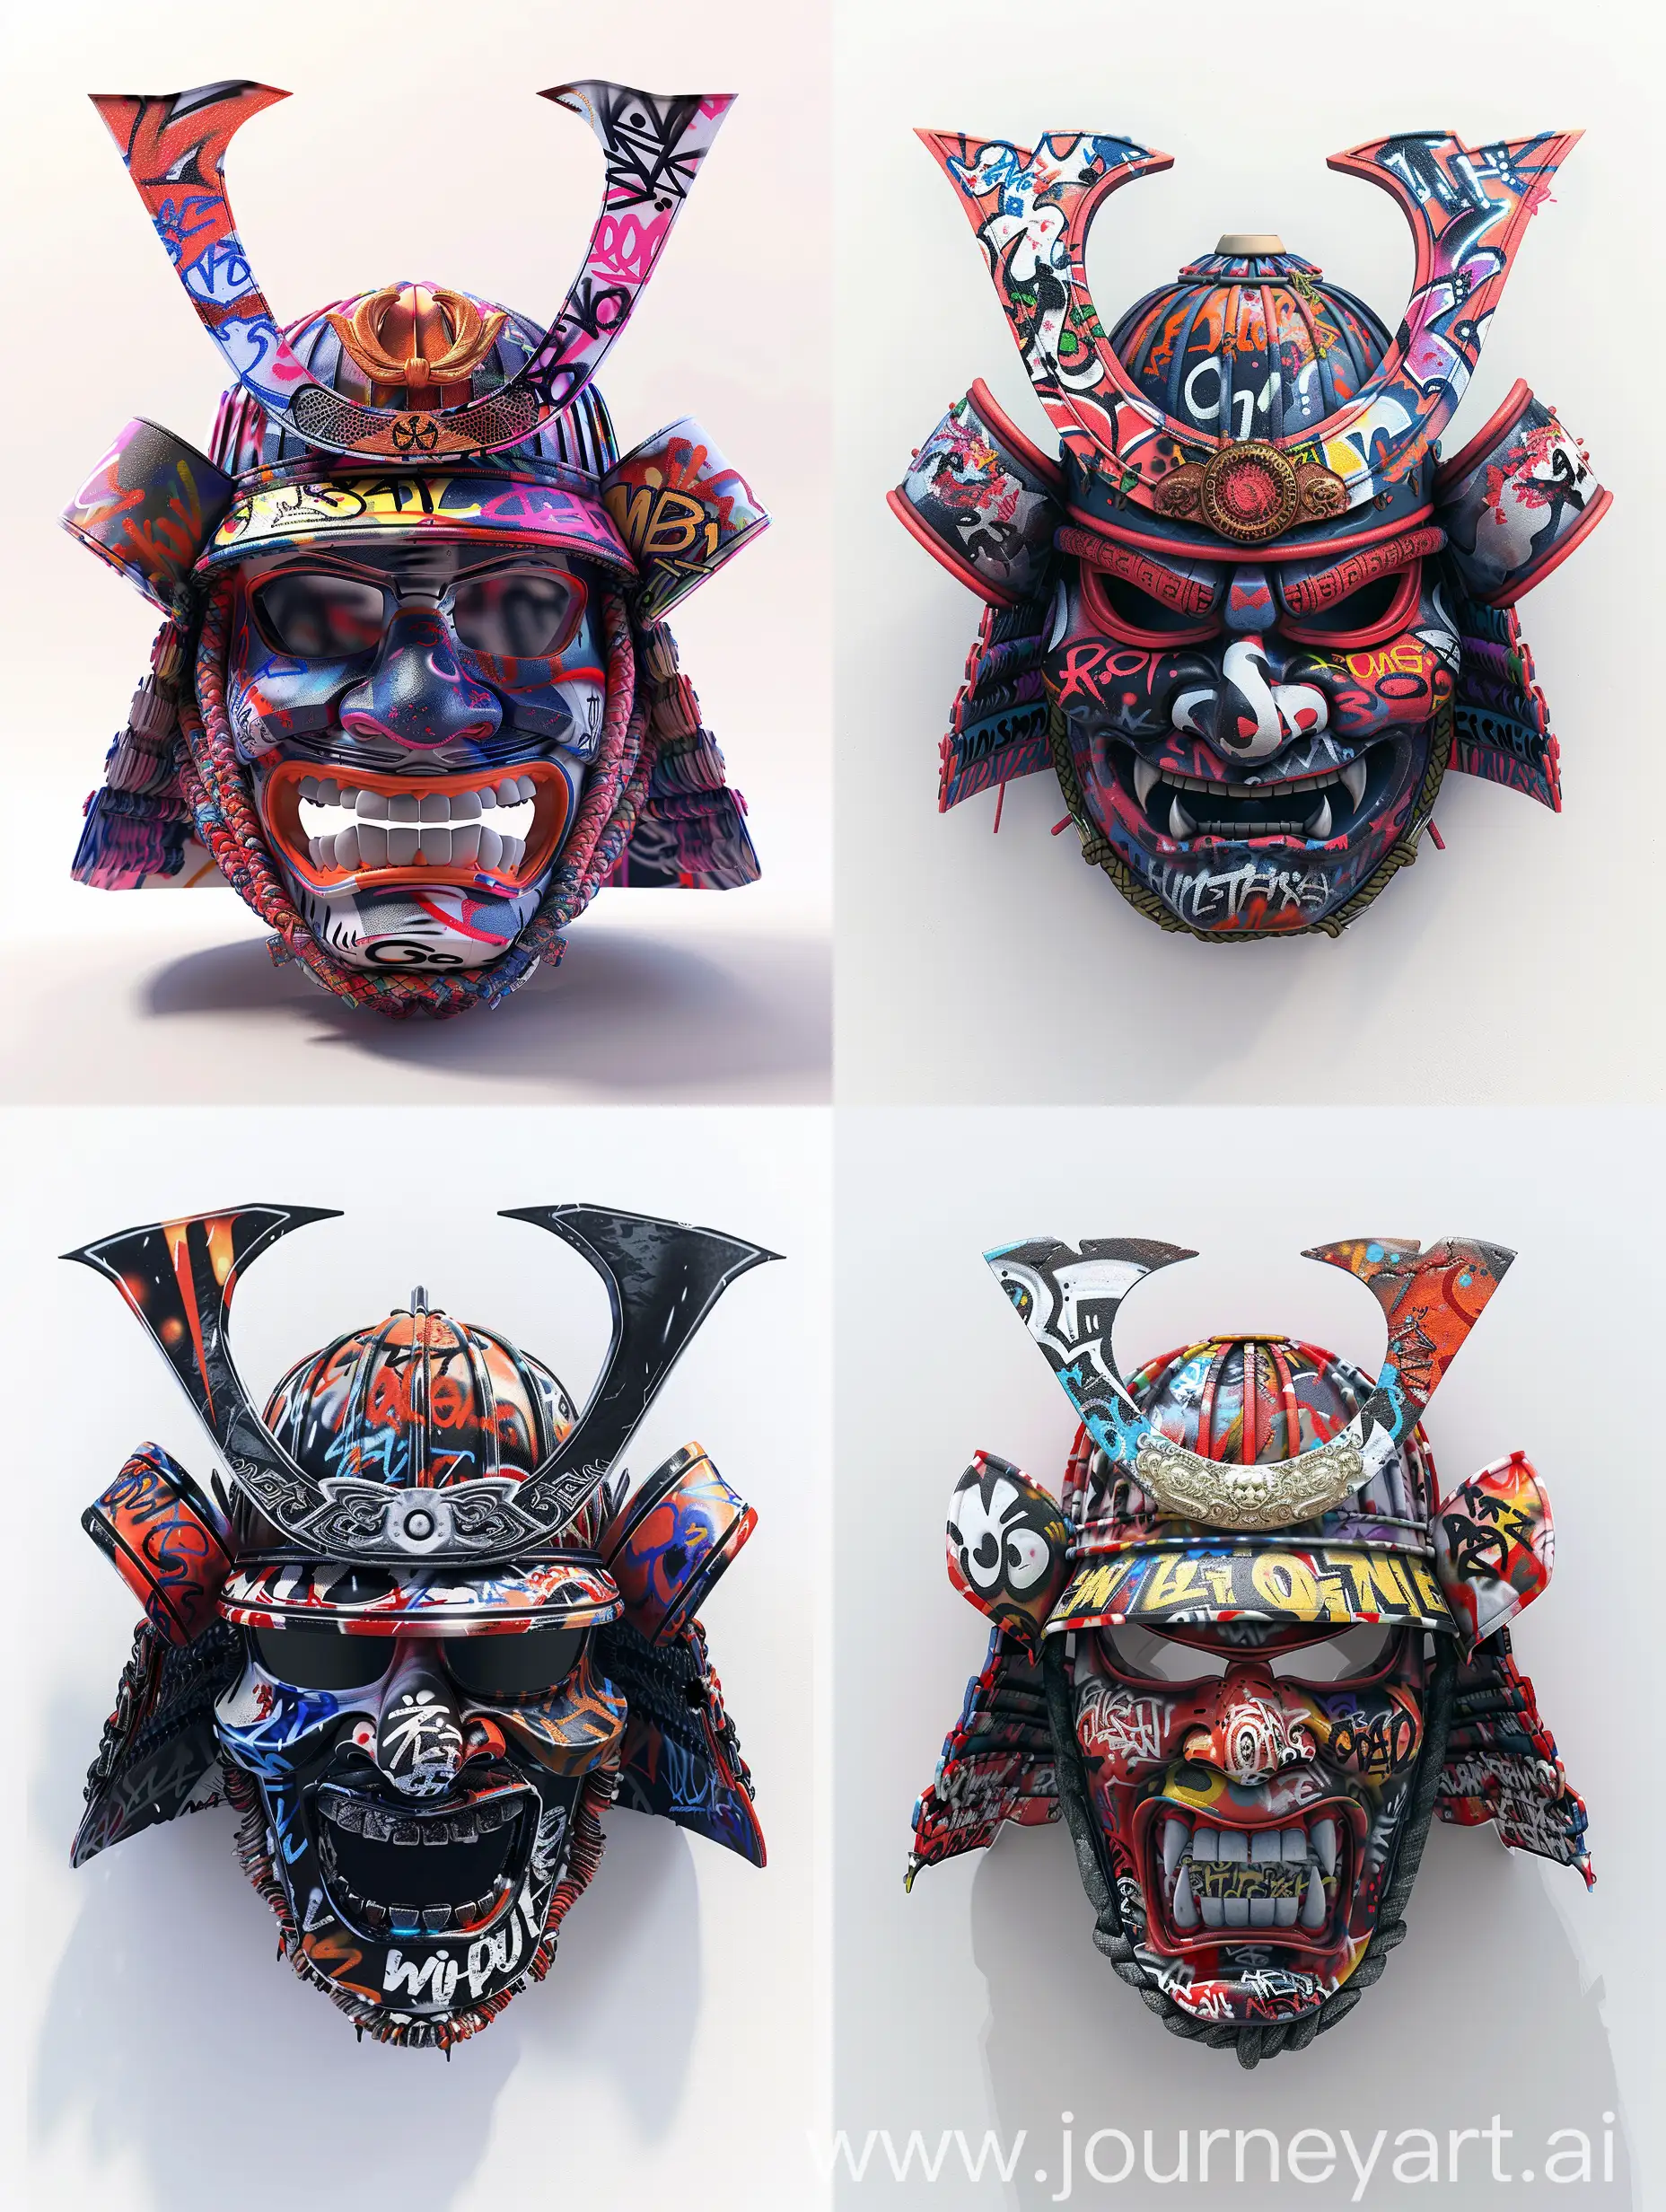 Dynamic-Samurai-Mask-Graffiti-Art-on-White-Background